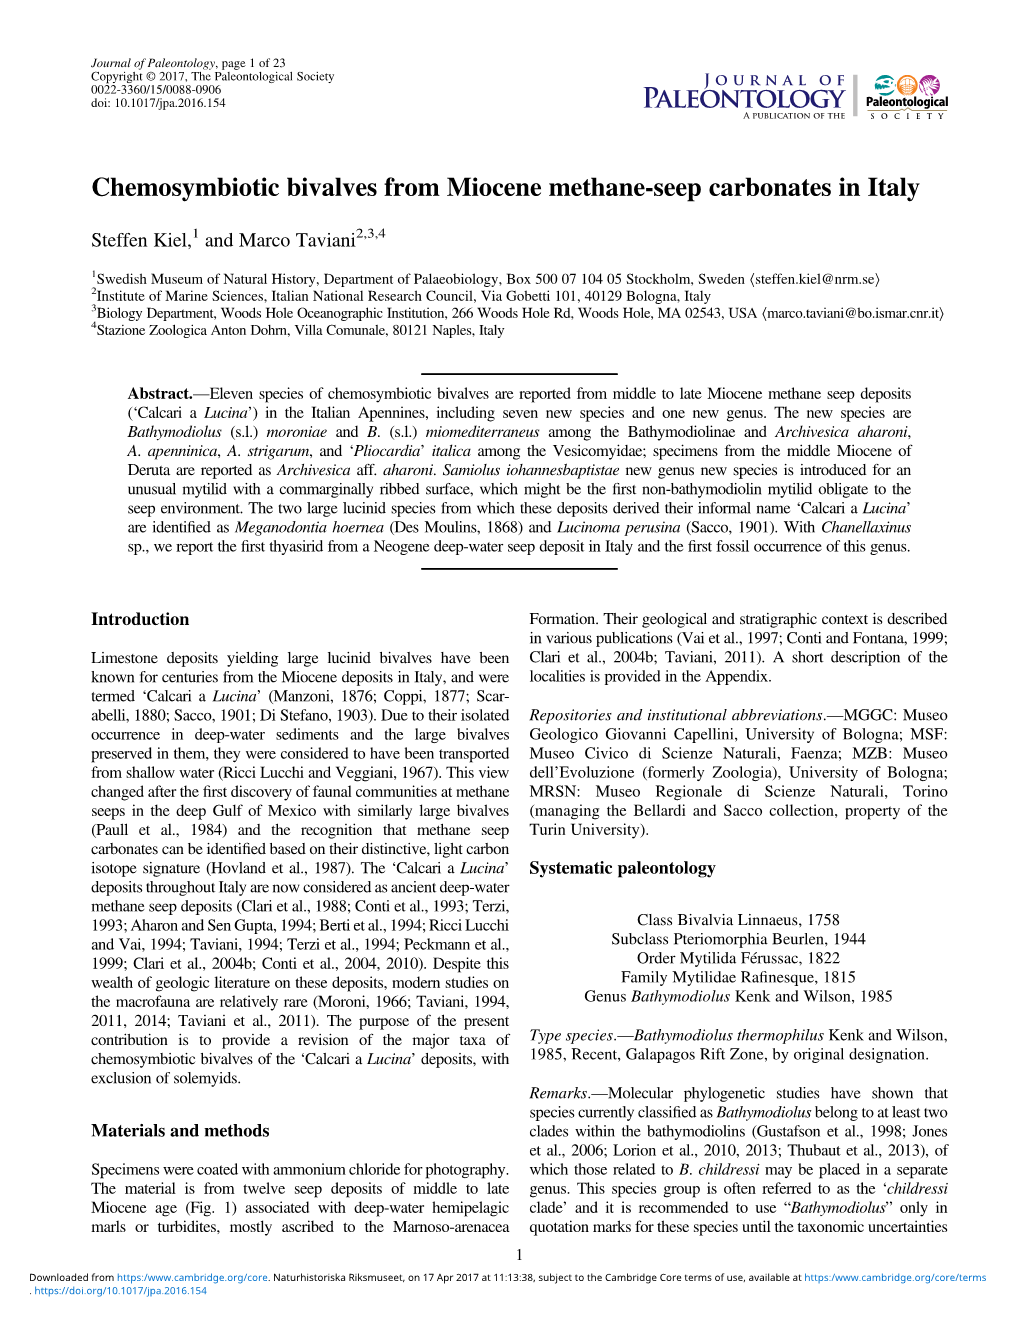 Chemosymbiotic Bivalves from Miocene Methane-Seep Carbonates in Italy